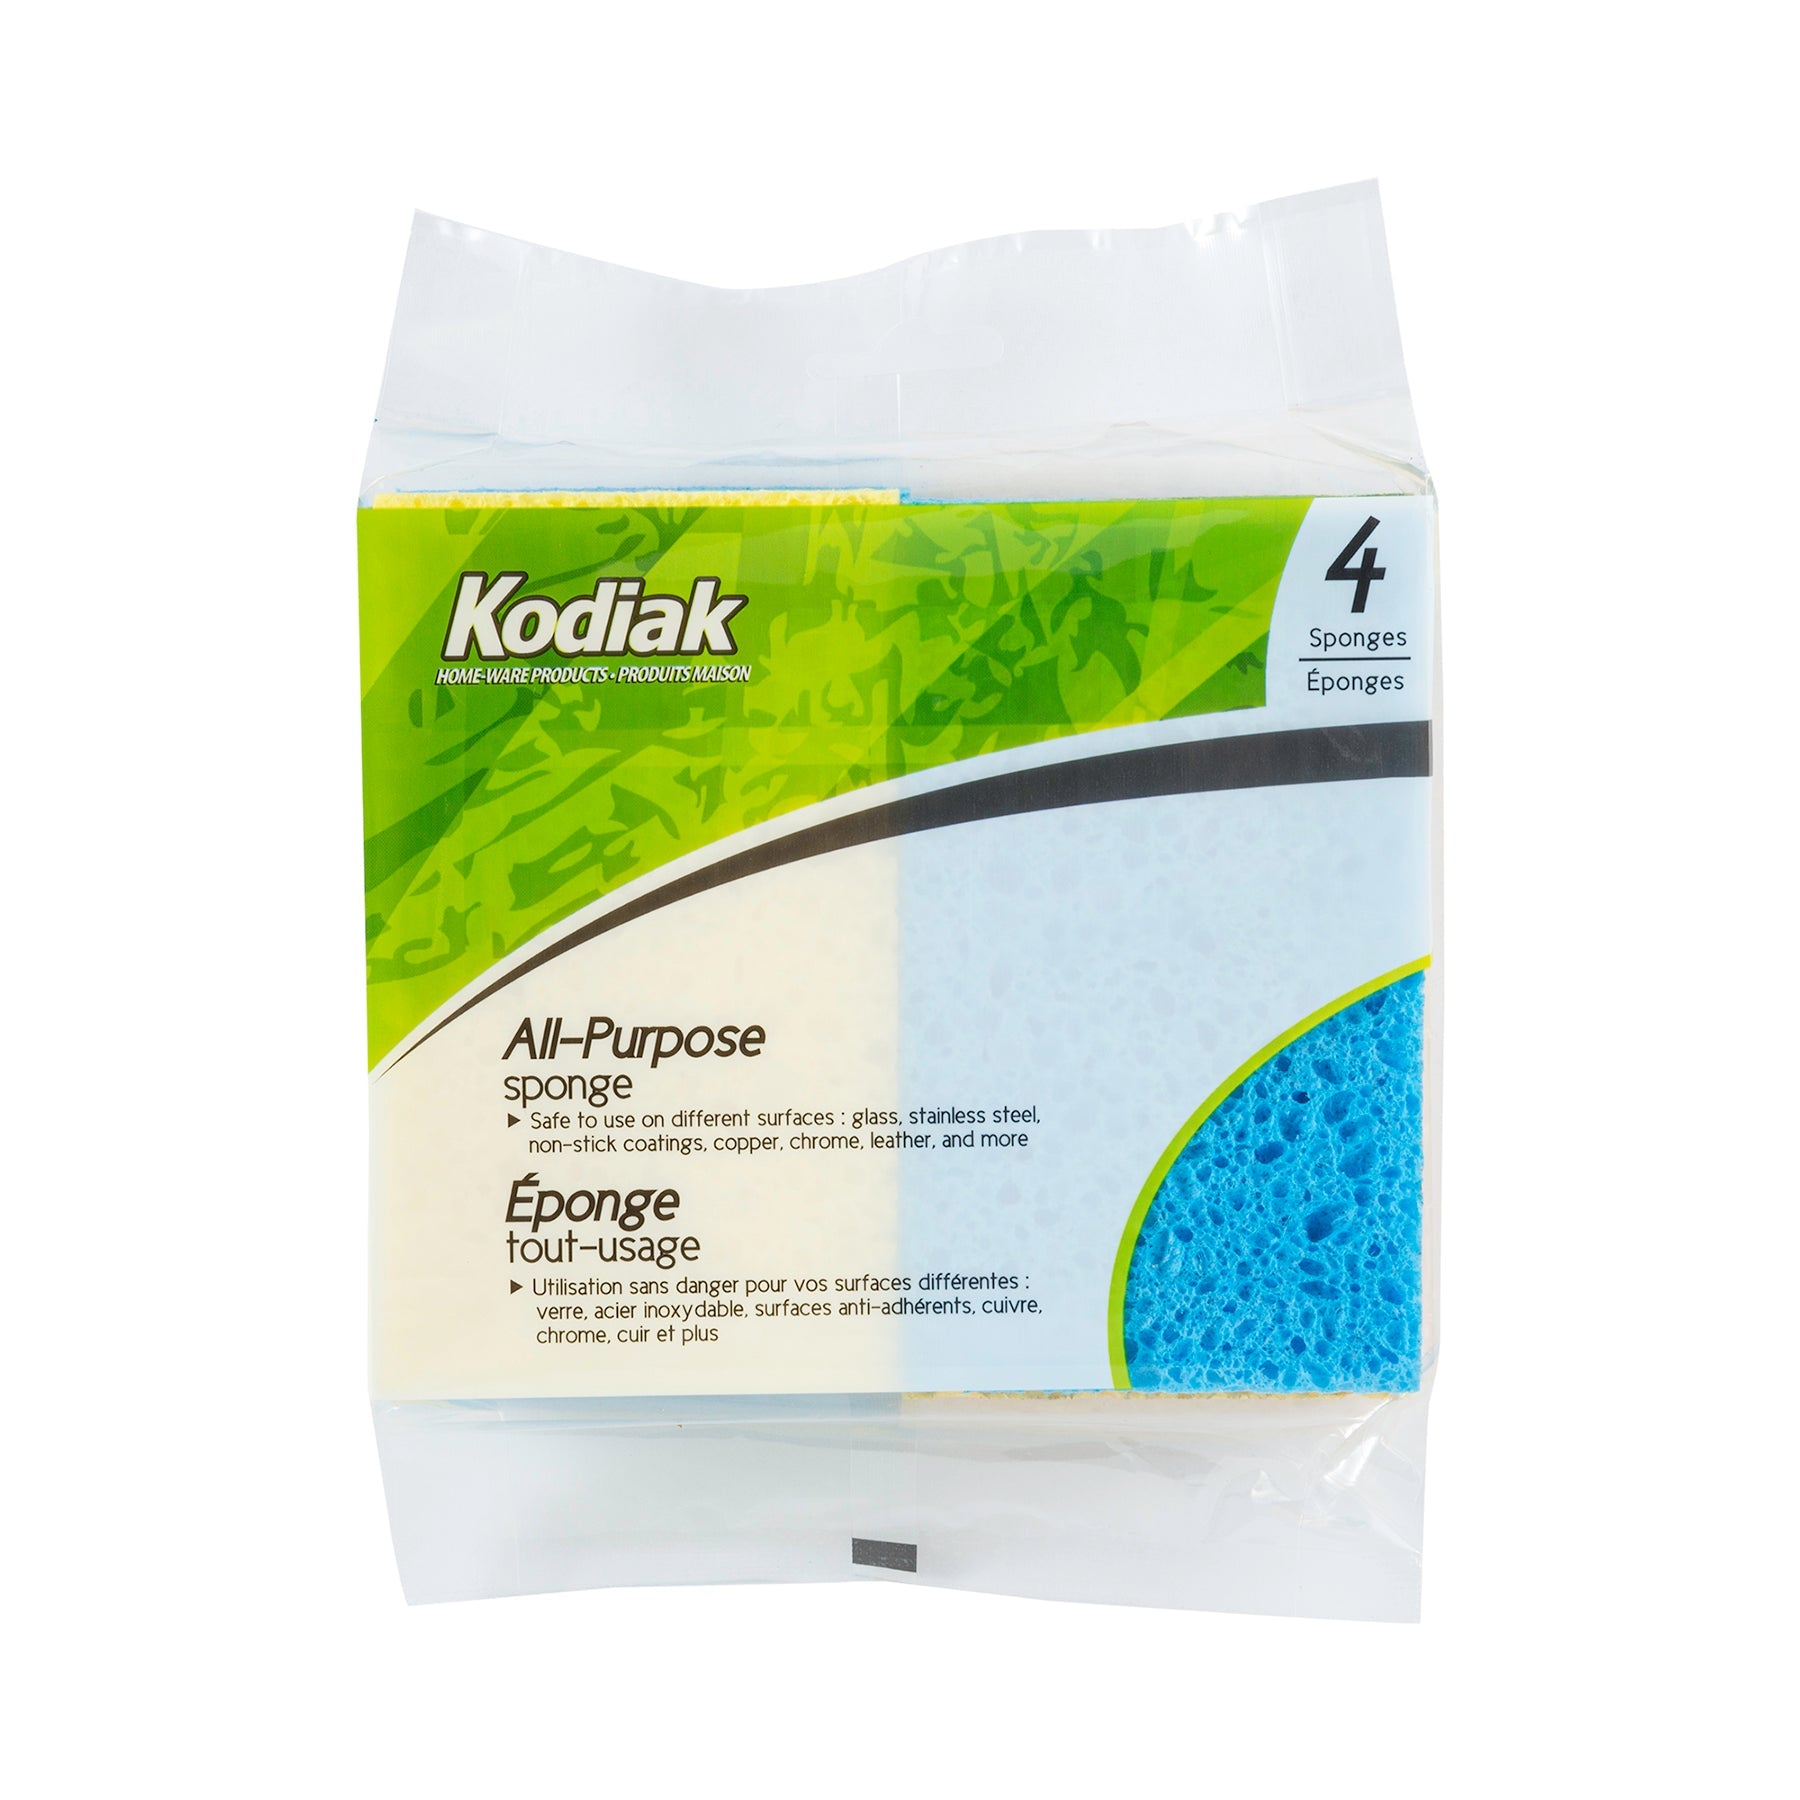 Kodiak 4 All-Purpose Cellulose Sponges 4.5x2.75in